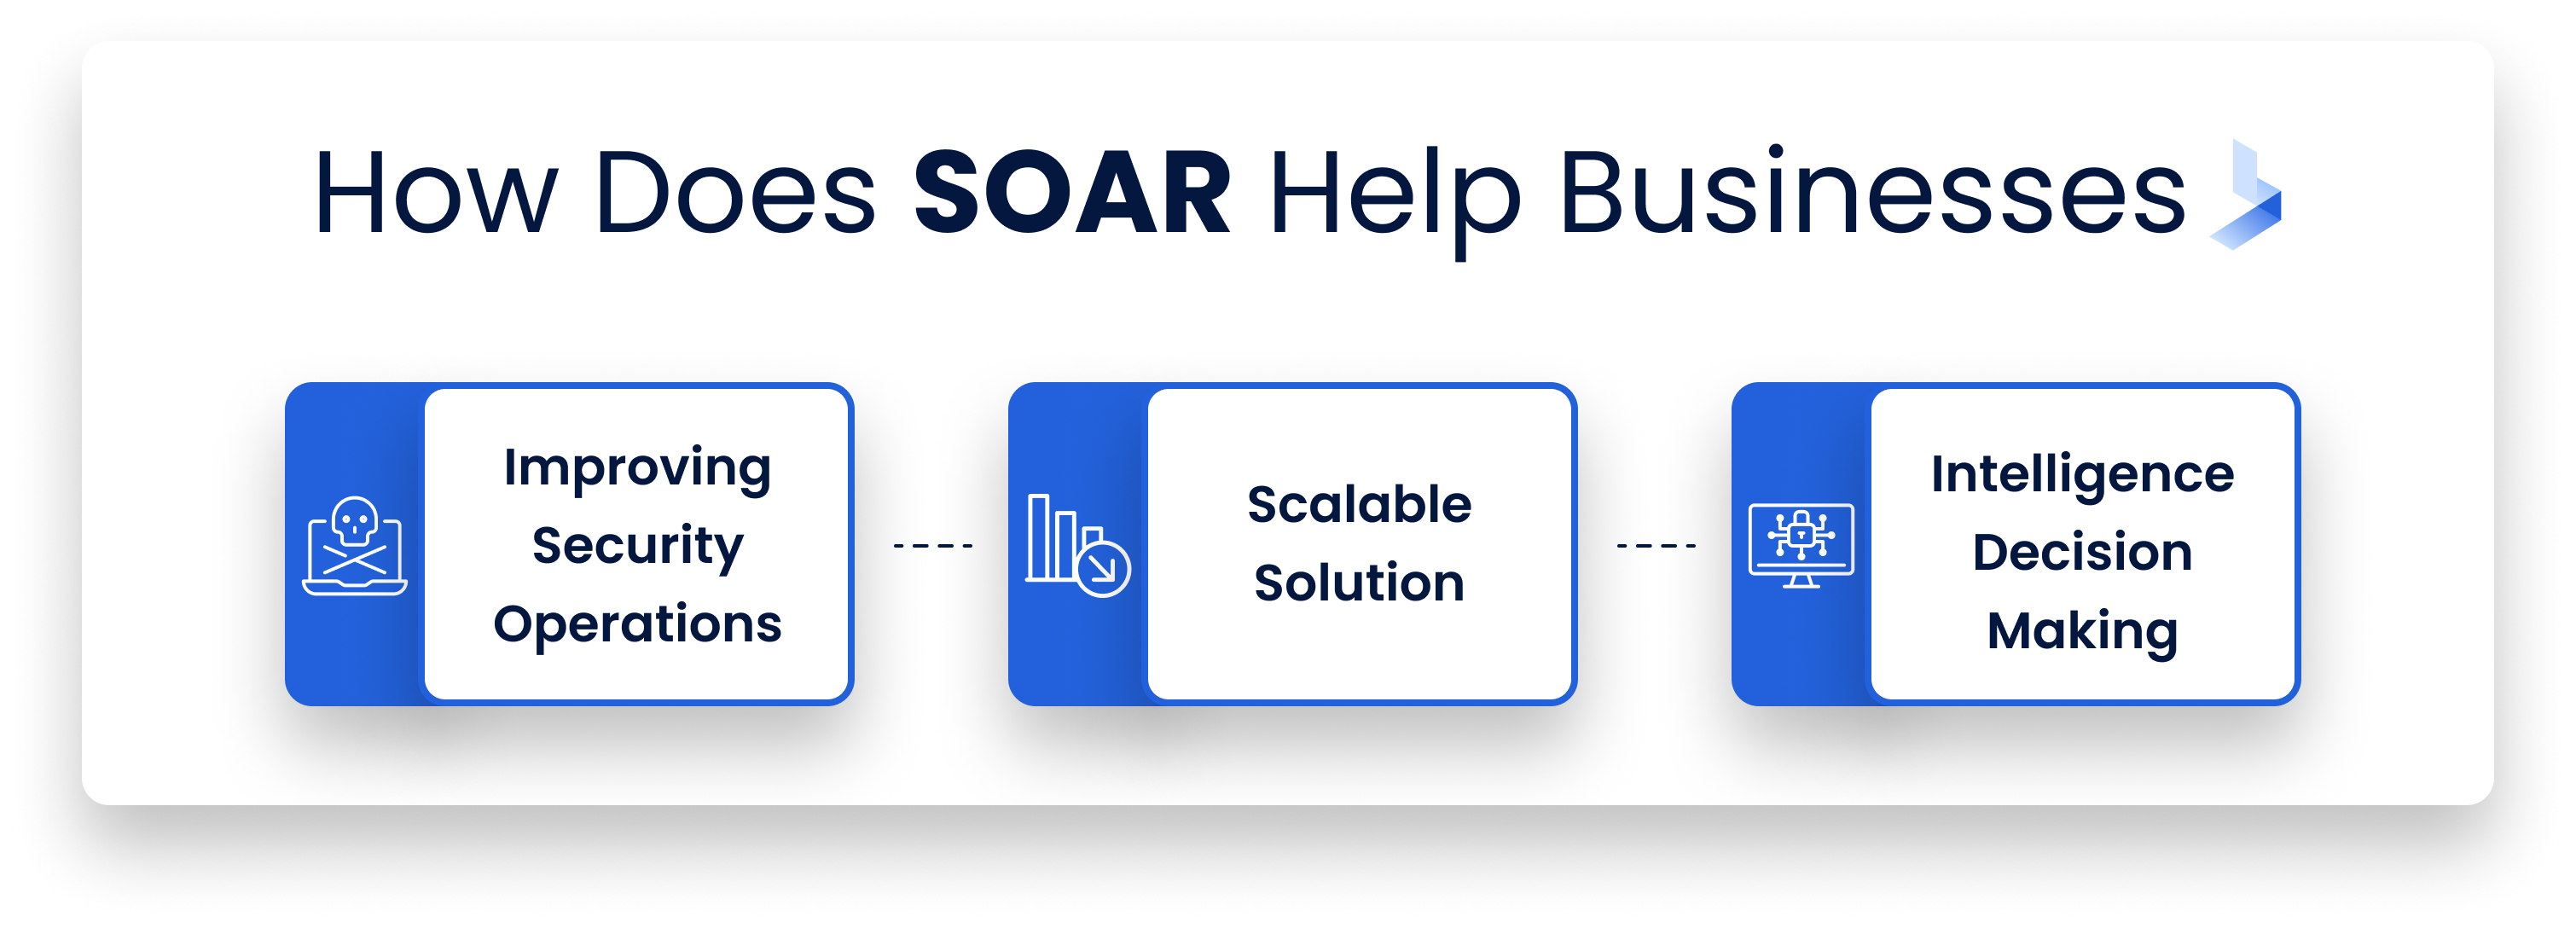 SOAR_Help_Businesses